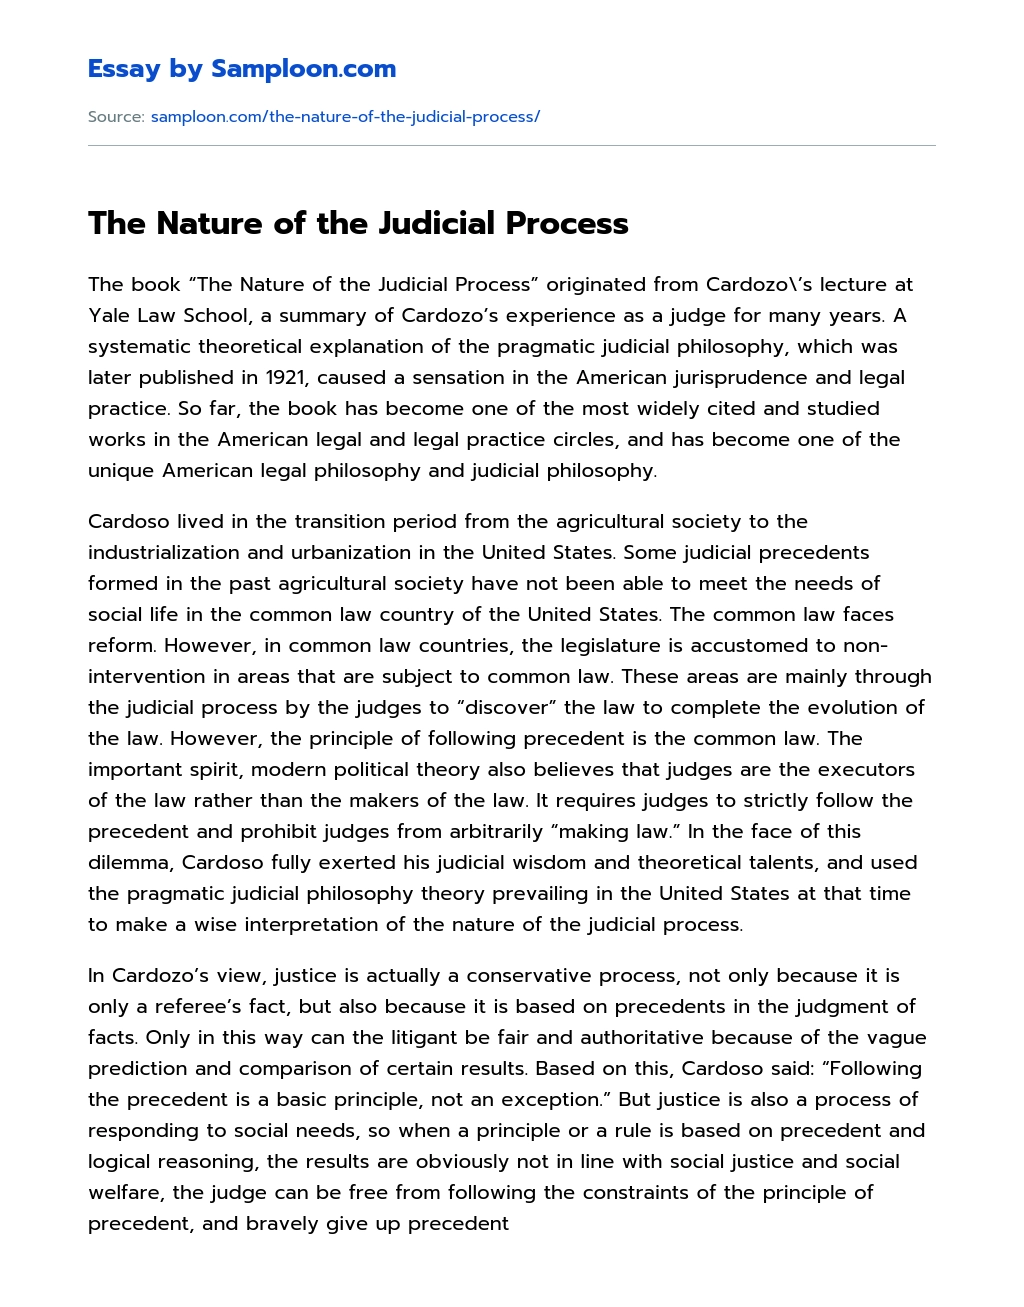 The Nature of the Judicial Process essay